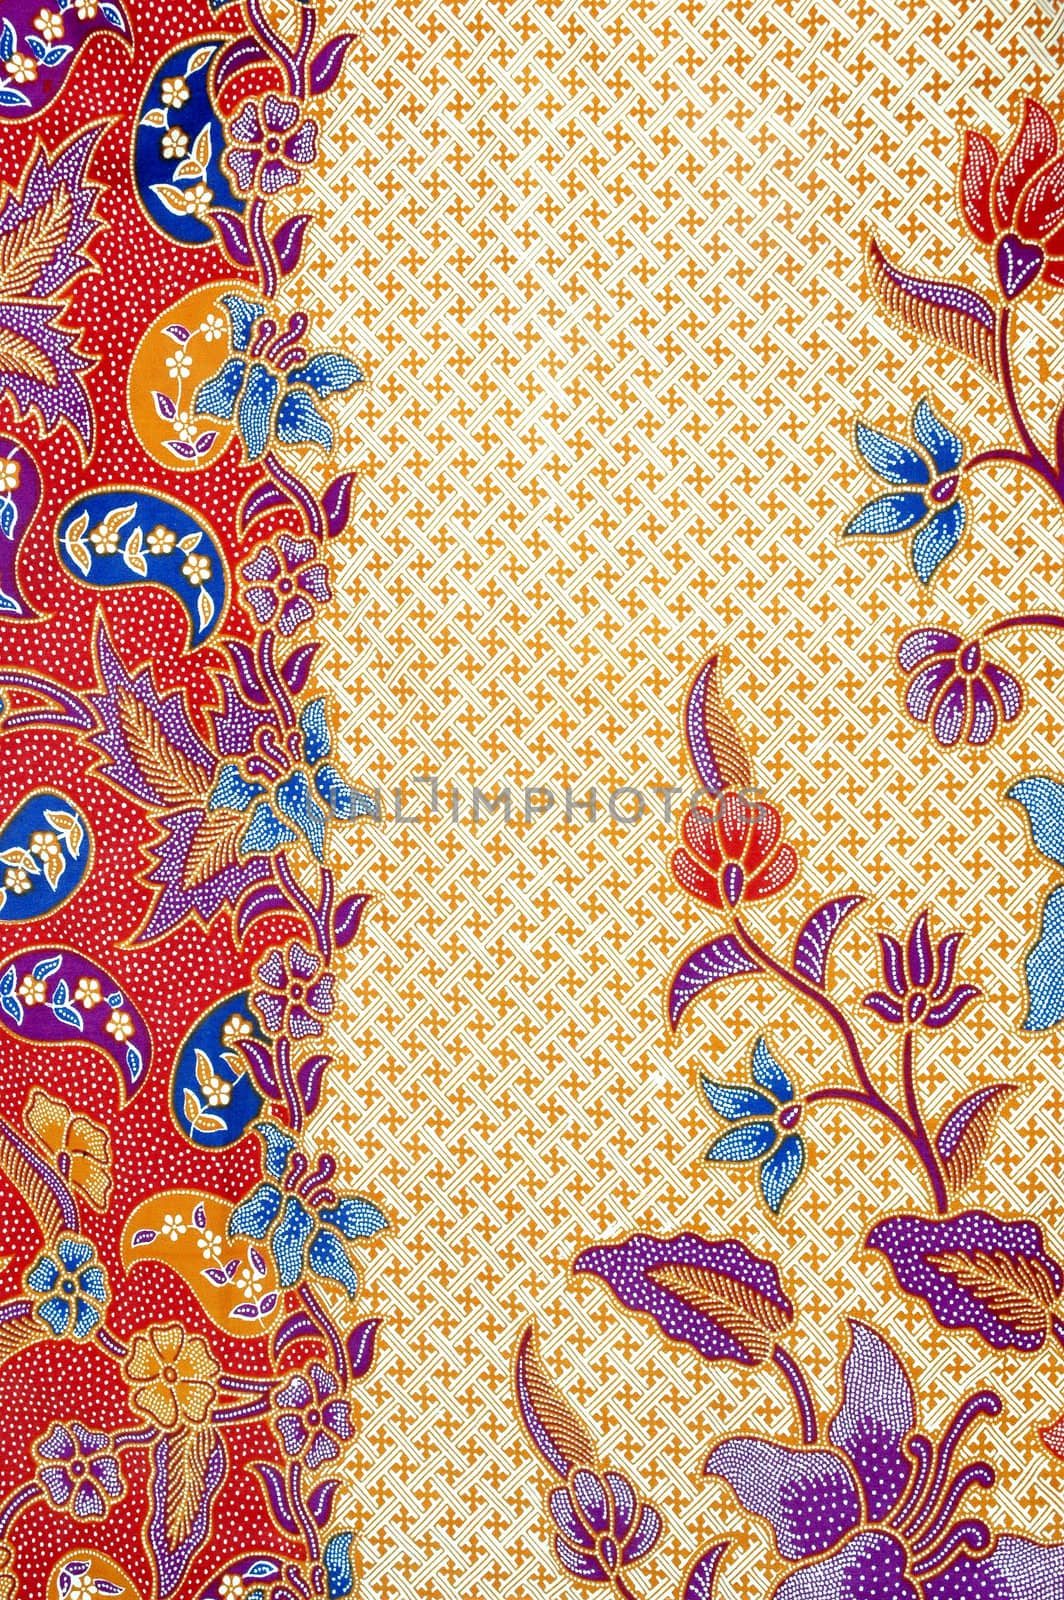 detailed patterns of indonesian batik cloth  by antonihalim